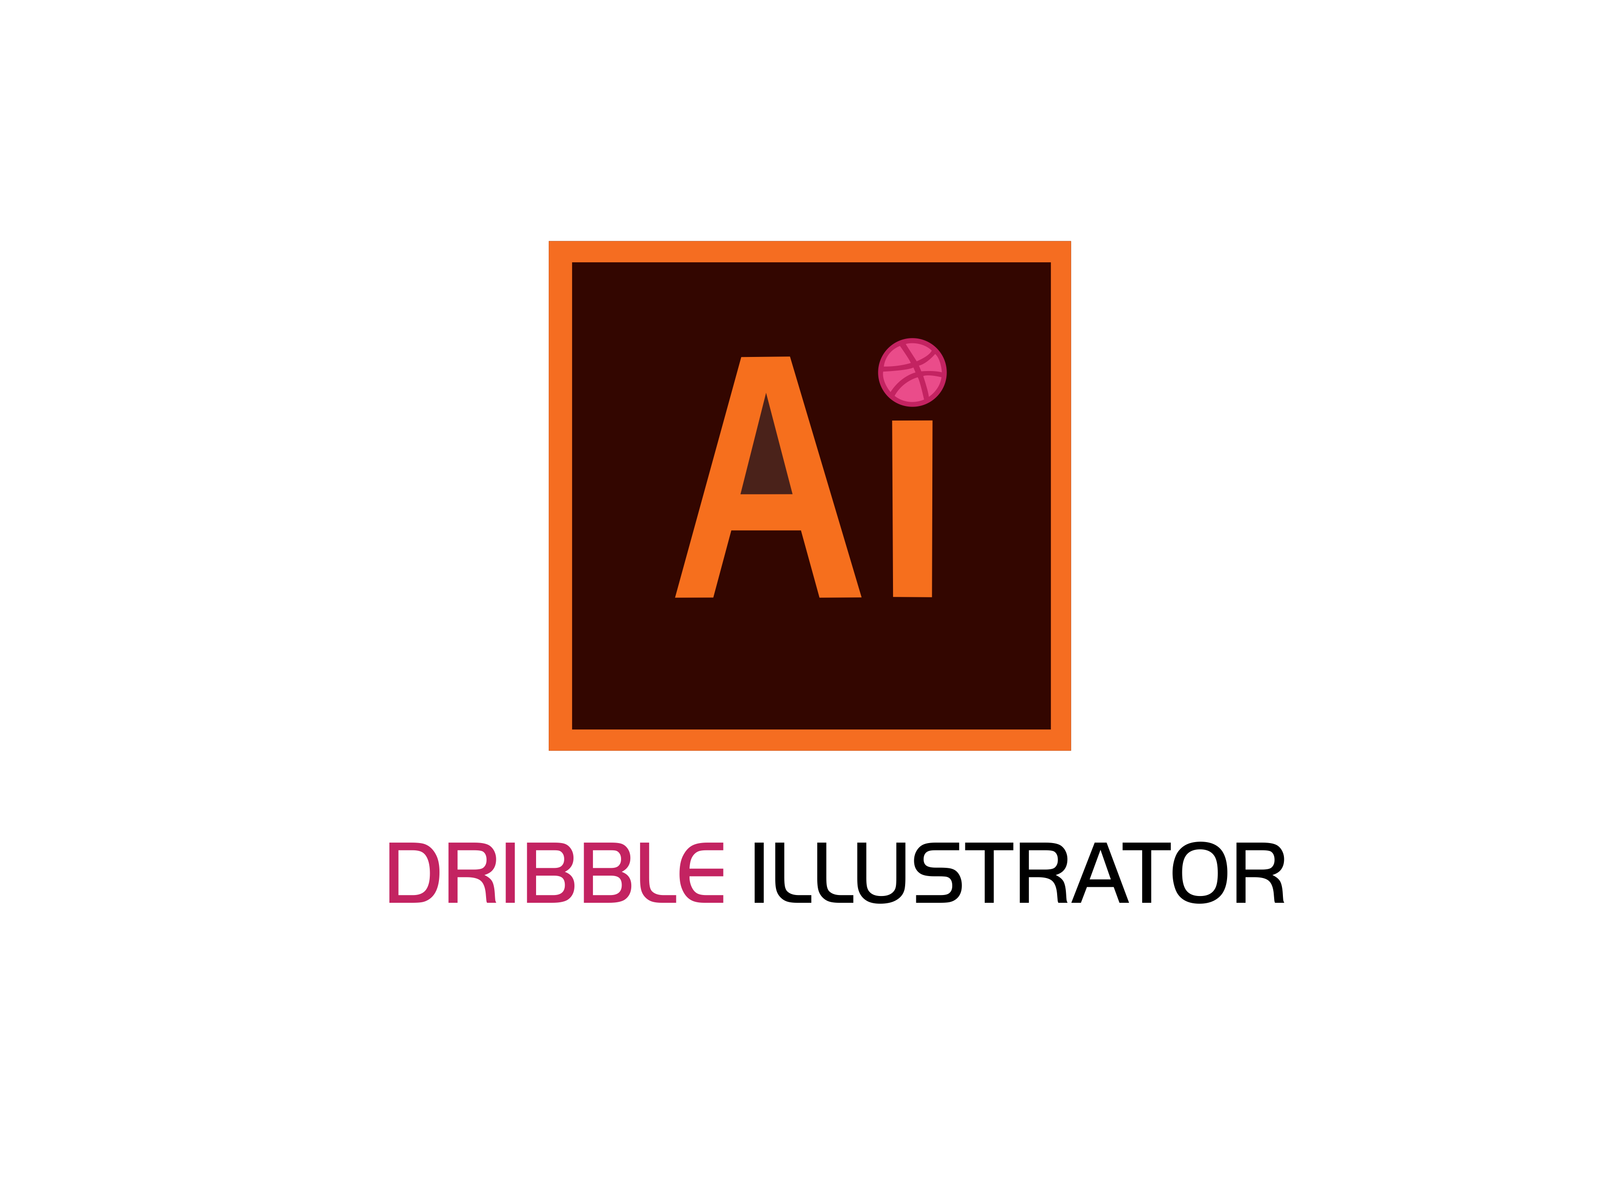 Create A Vector Art Twitter Bird Character Icon In Adobe Illustrator - Go  Media™ · Creativity at work!